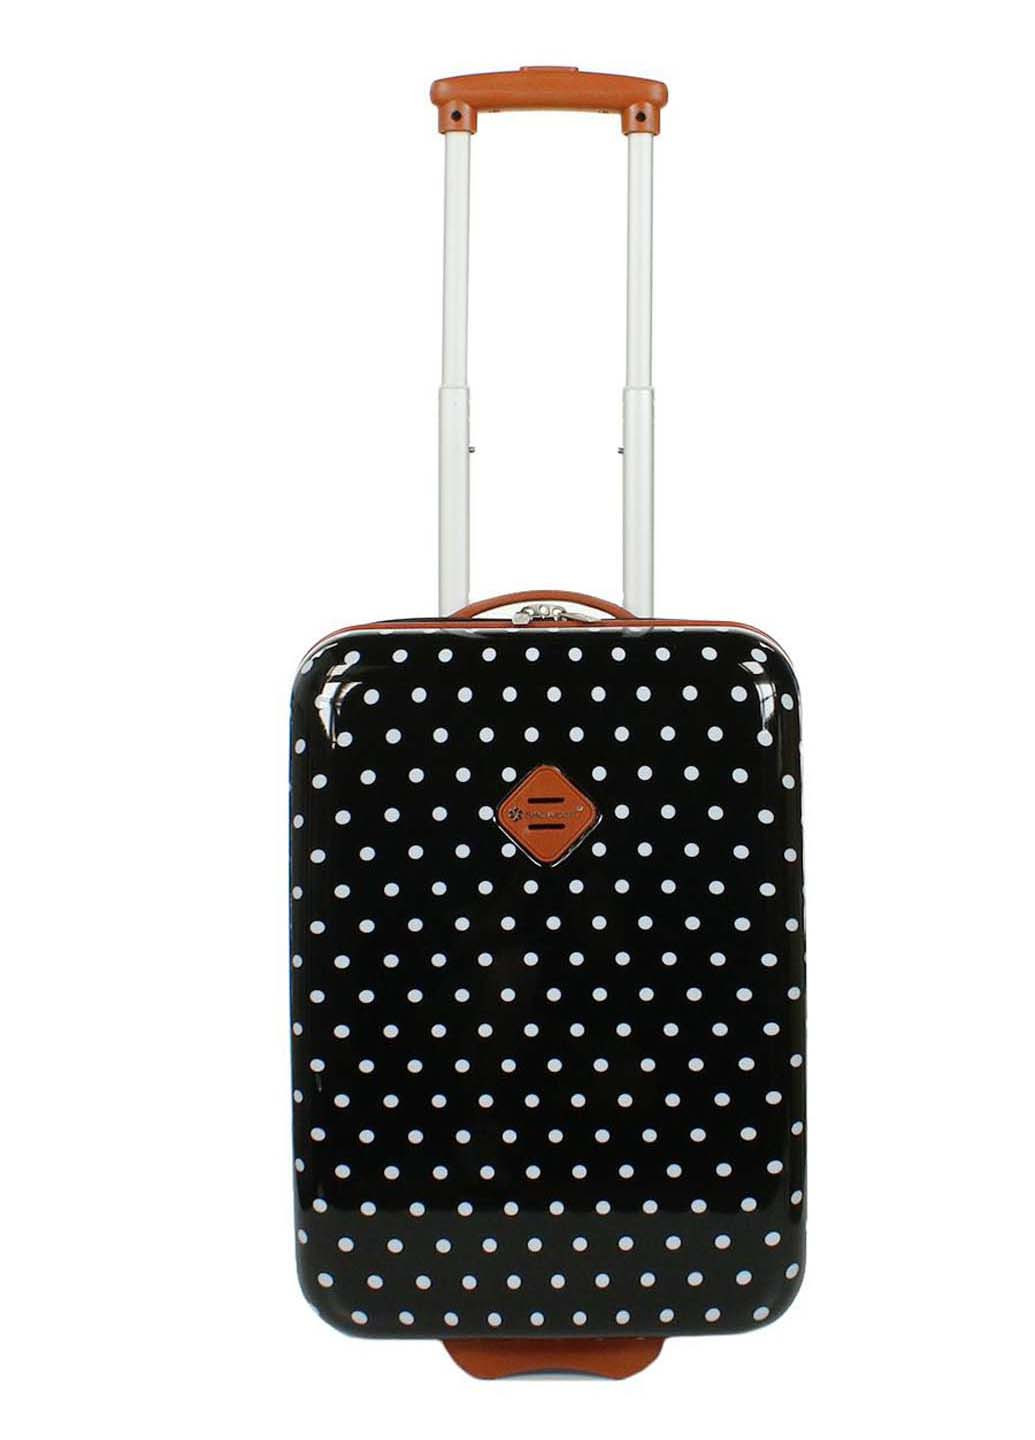 Дитяча валіза маленька S ABS-пластик 65118 48×32,5×20см 25л Snowball (290664436)